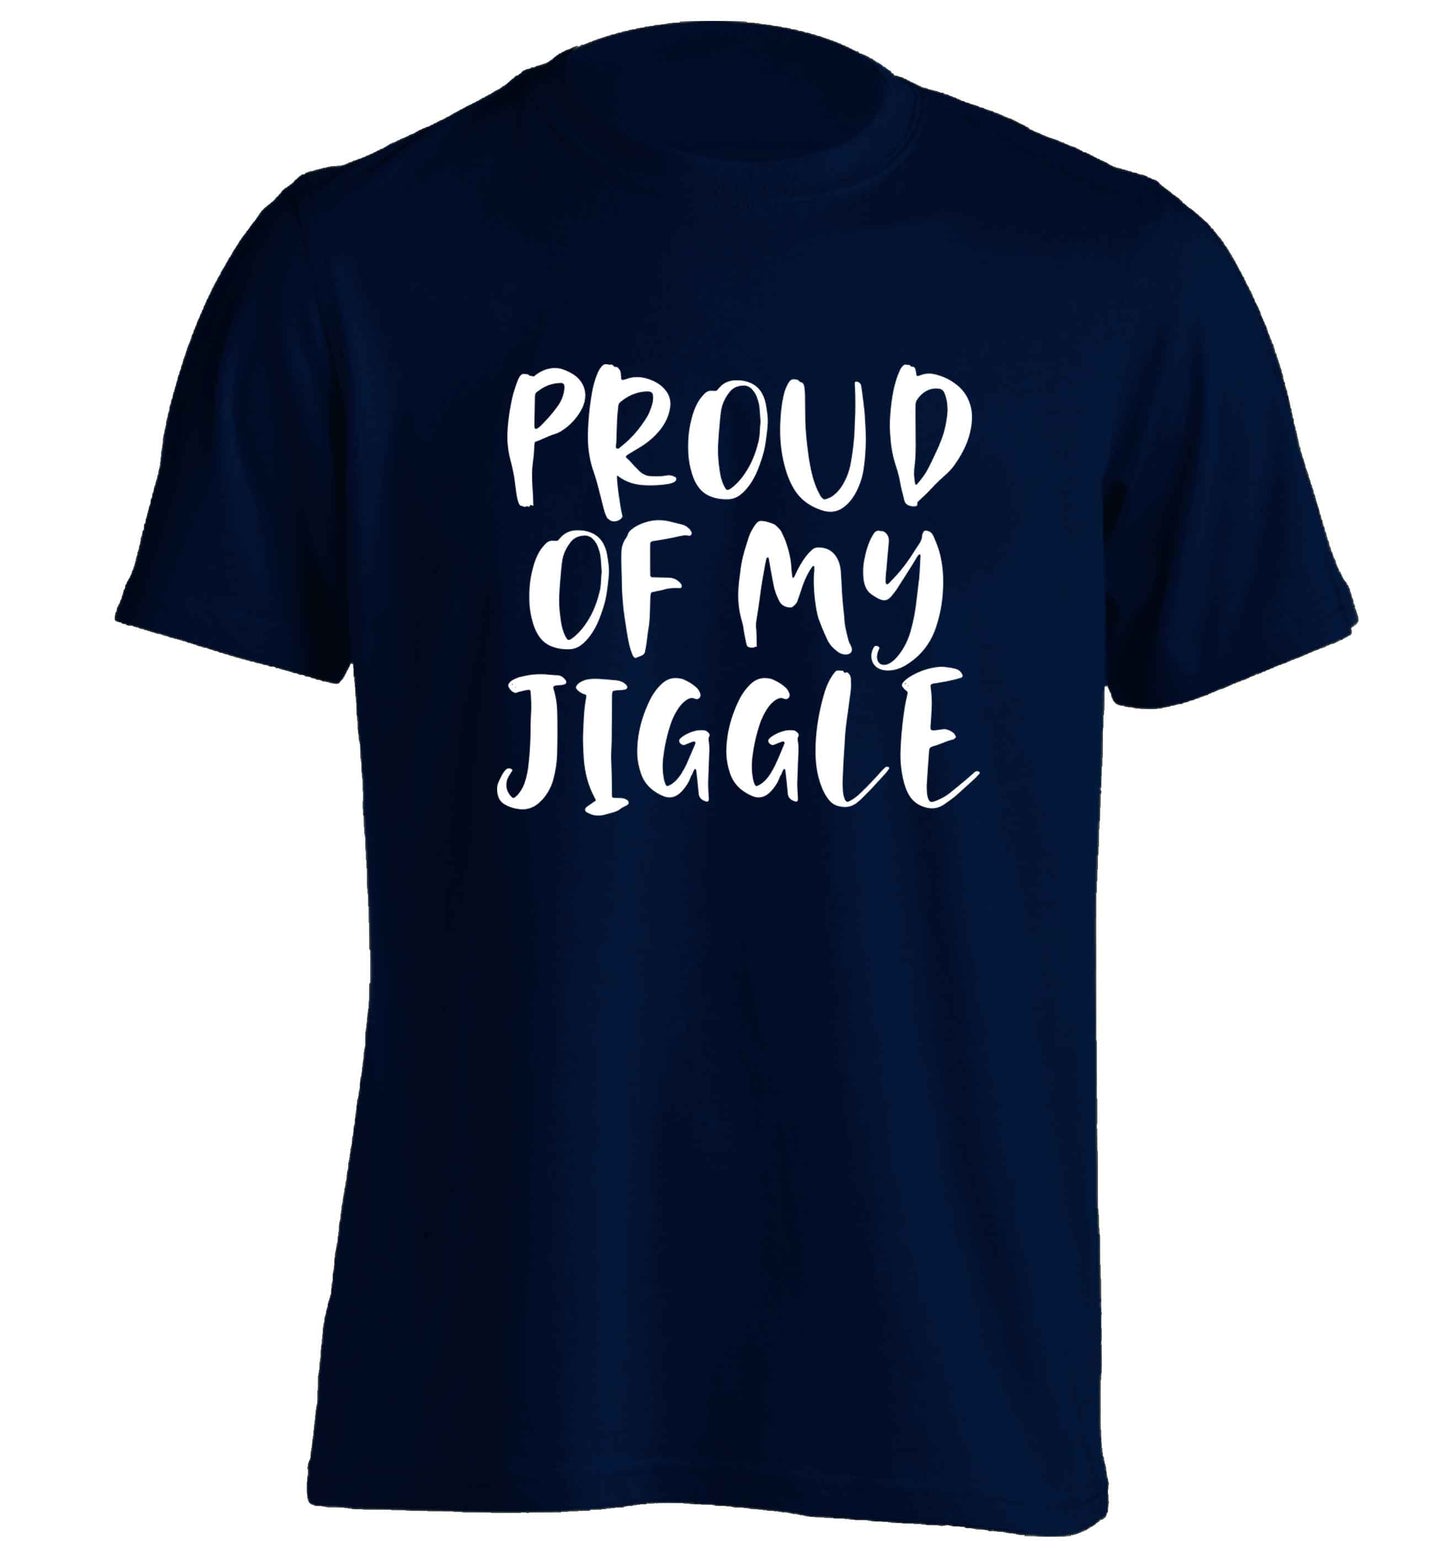 Proud of my jiggle adults unisex navy Tshirt 2XL